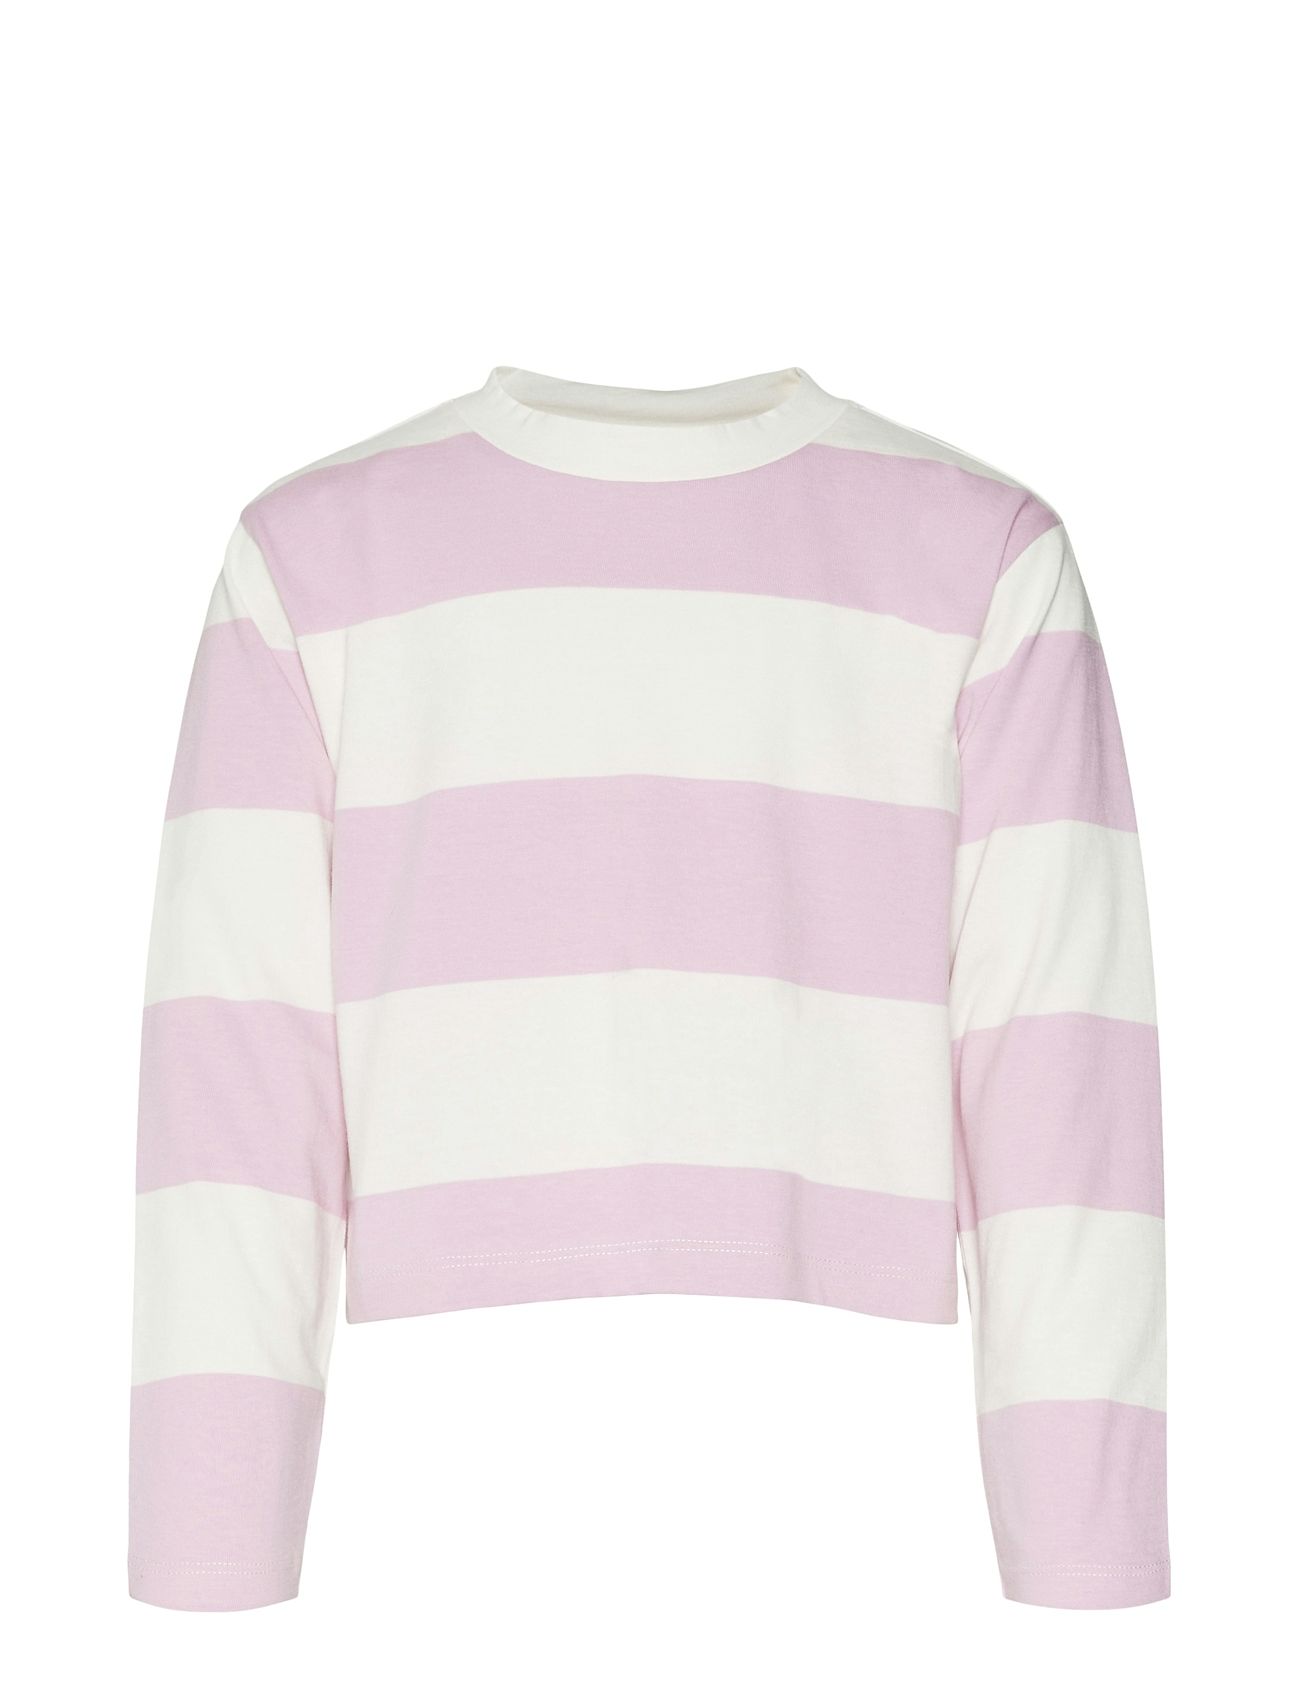 Vm Lla Ls Stripe Cropped Top Jrs Girl Tops T-shirts Long-sleeved T-shirts Pink Vero Moda Girl